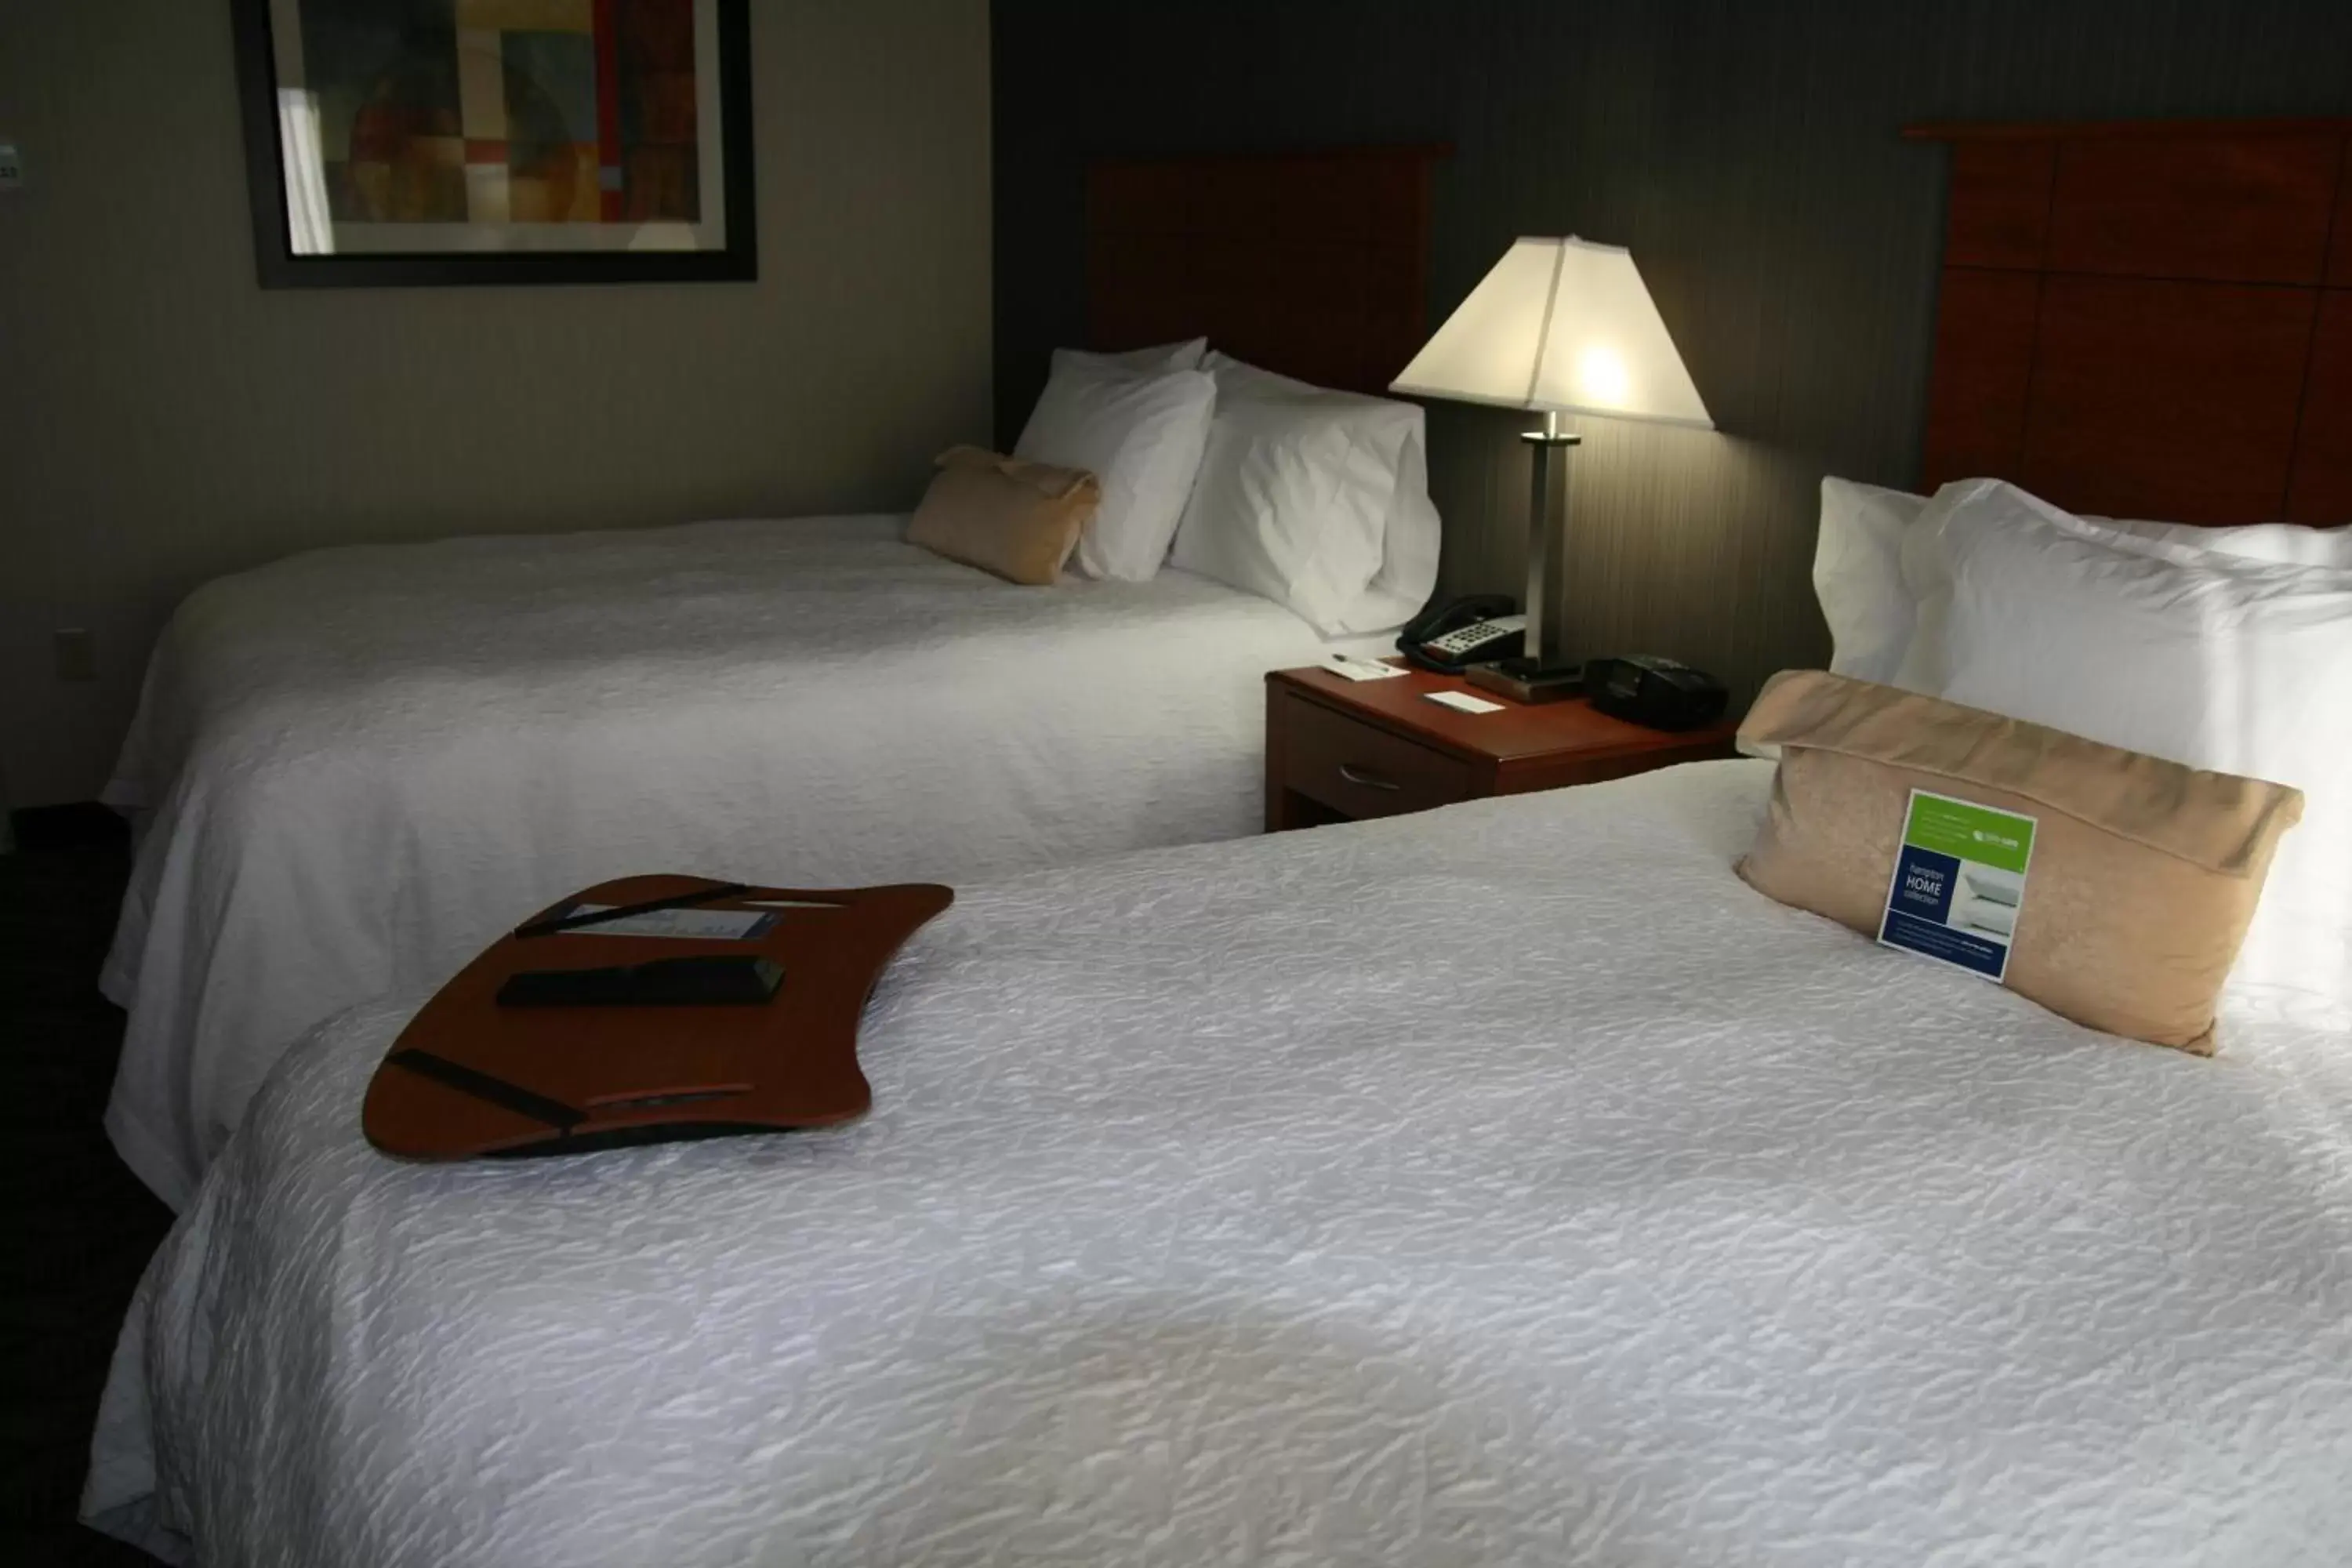 Bedroom, Room Photo in Hampton Inn & Suites Craig, CO